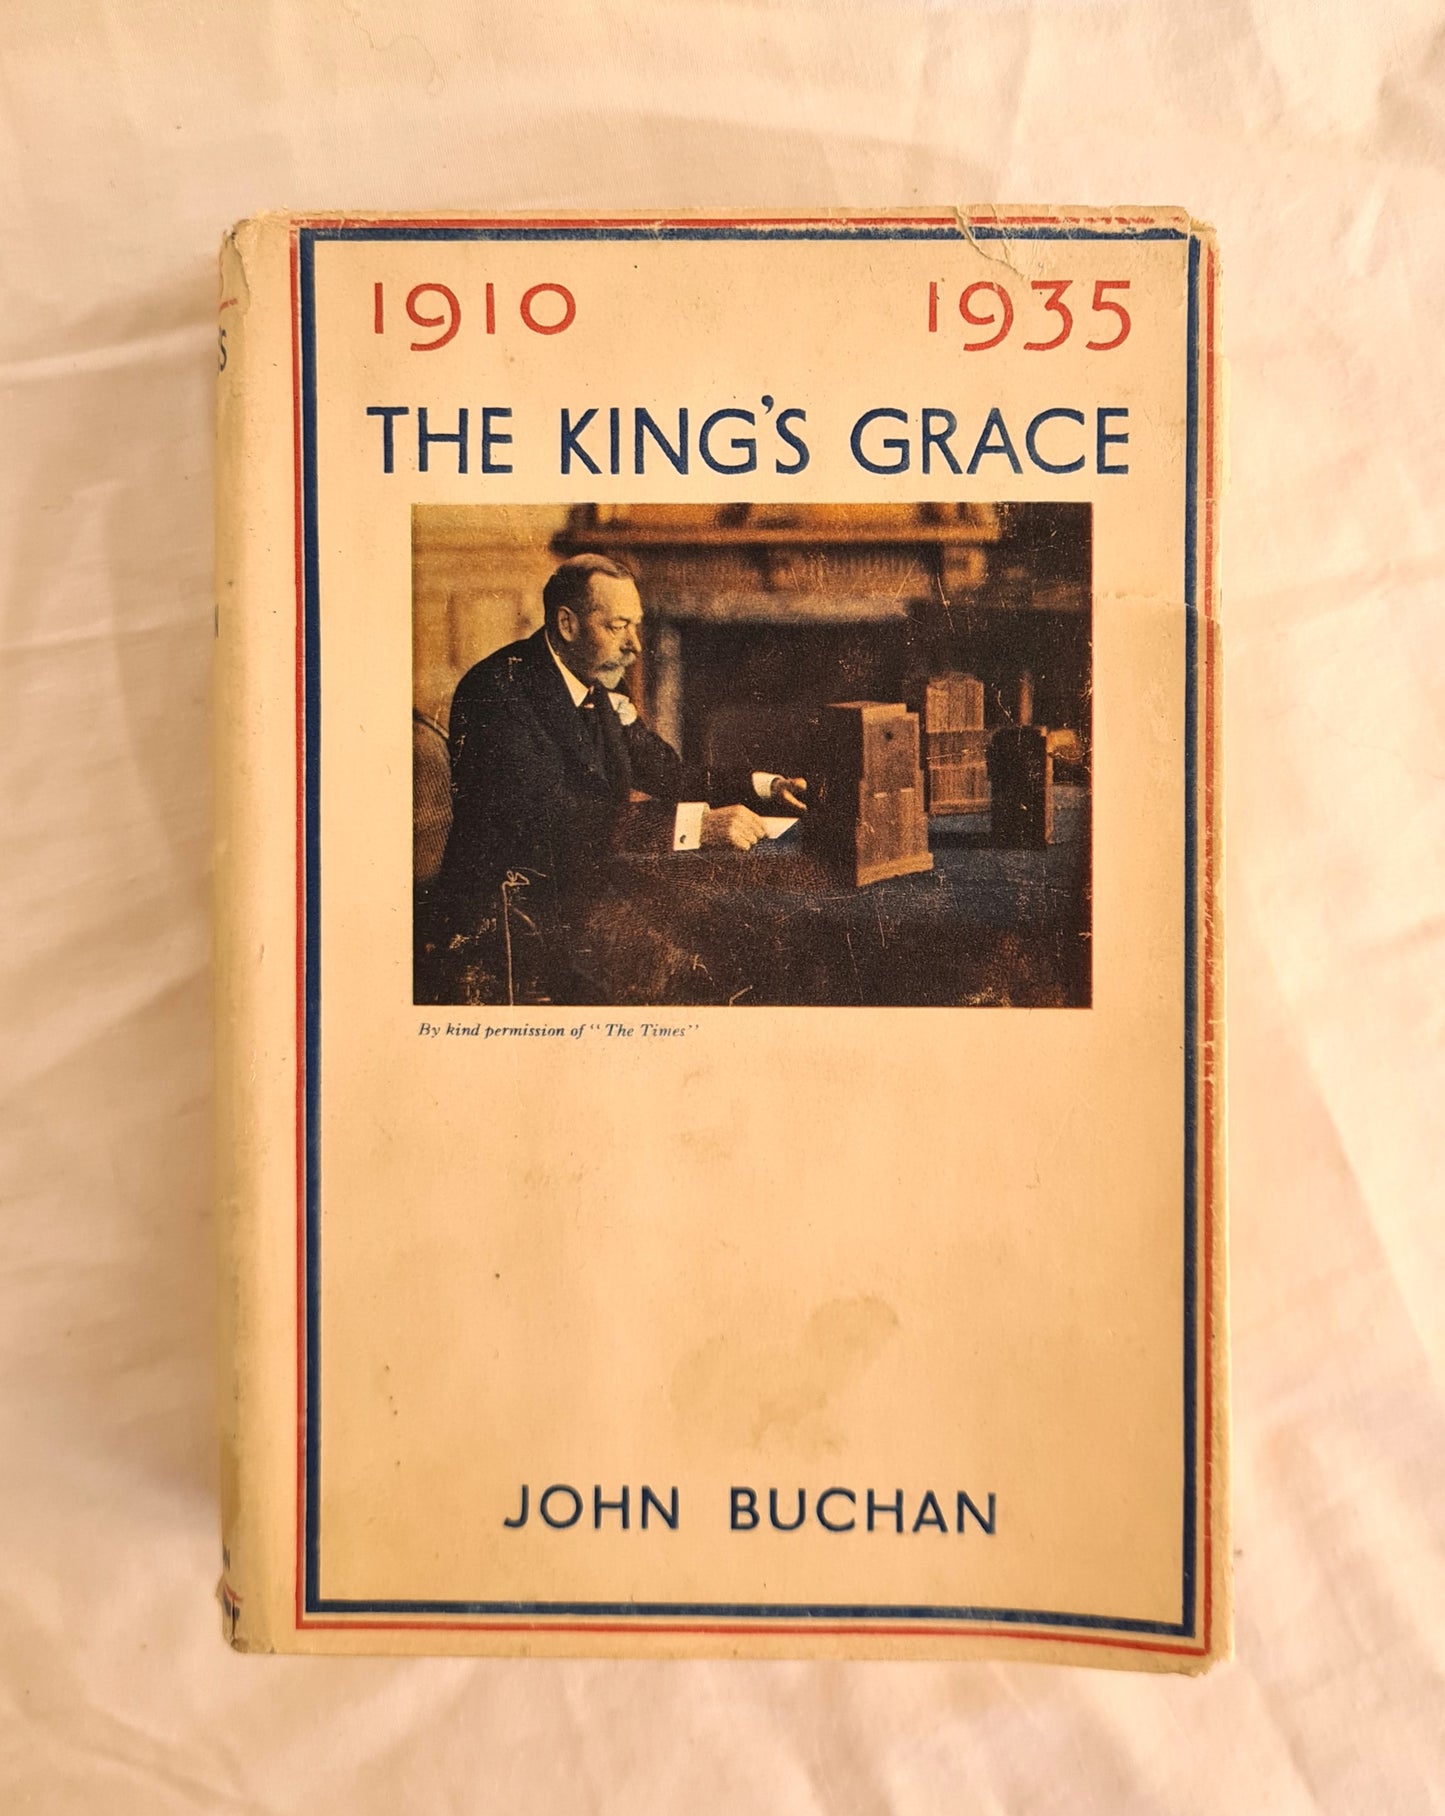 The King’s Grace 1910-1935 by John Buchan